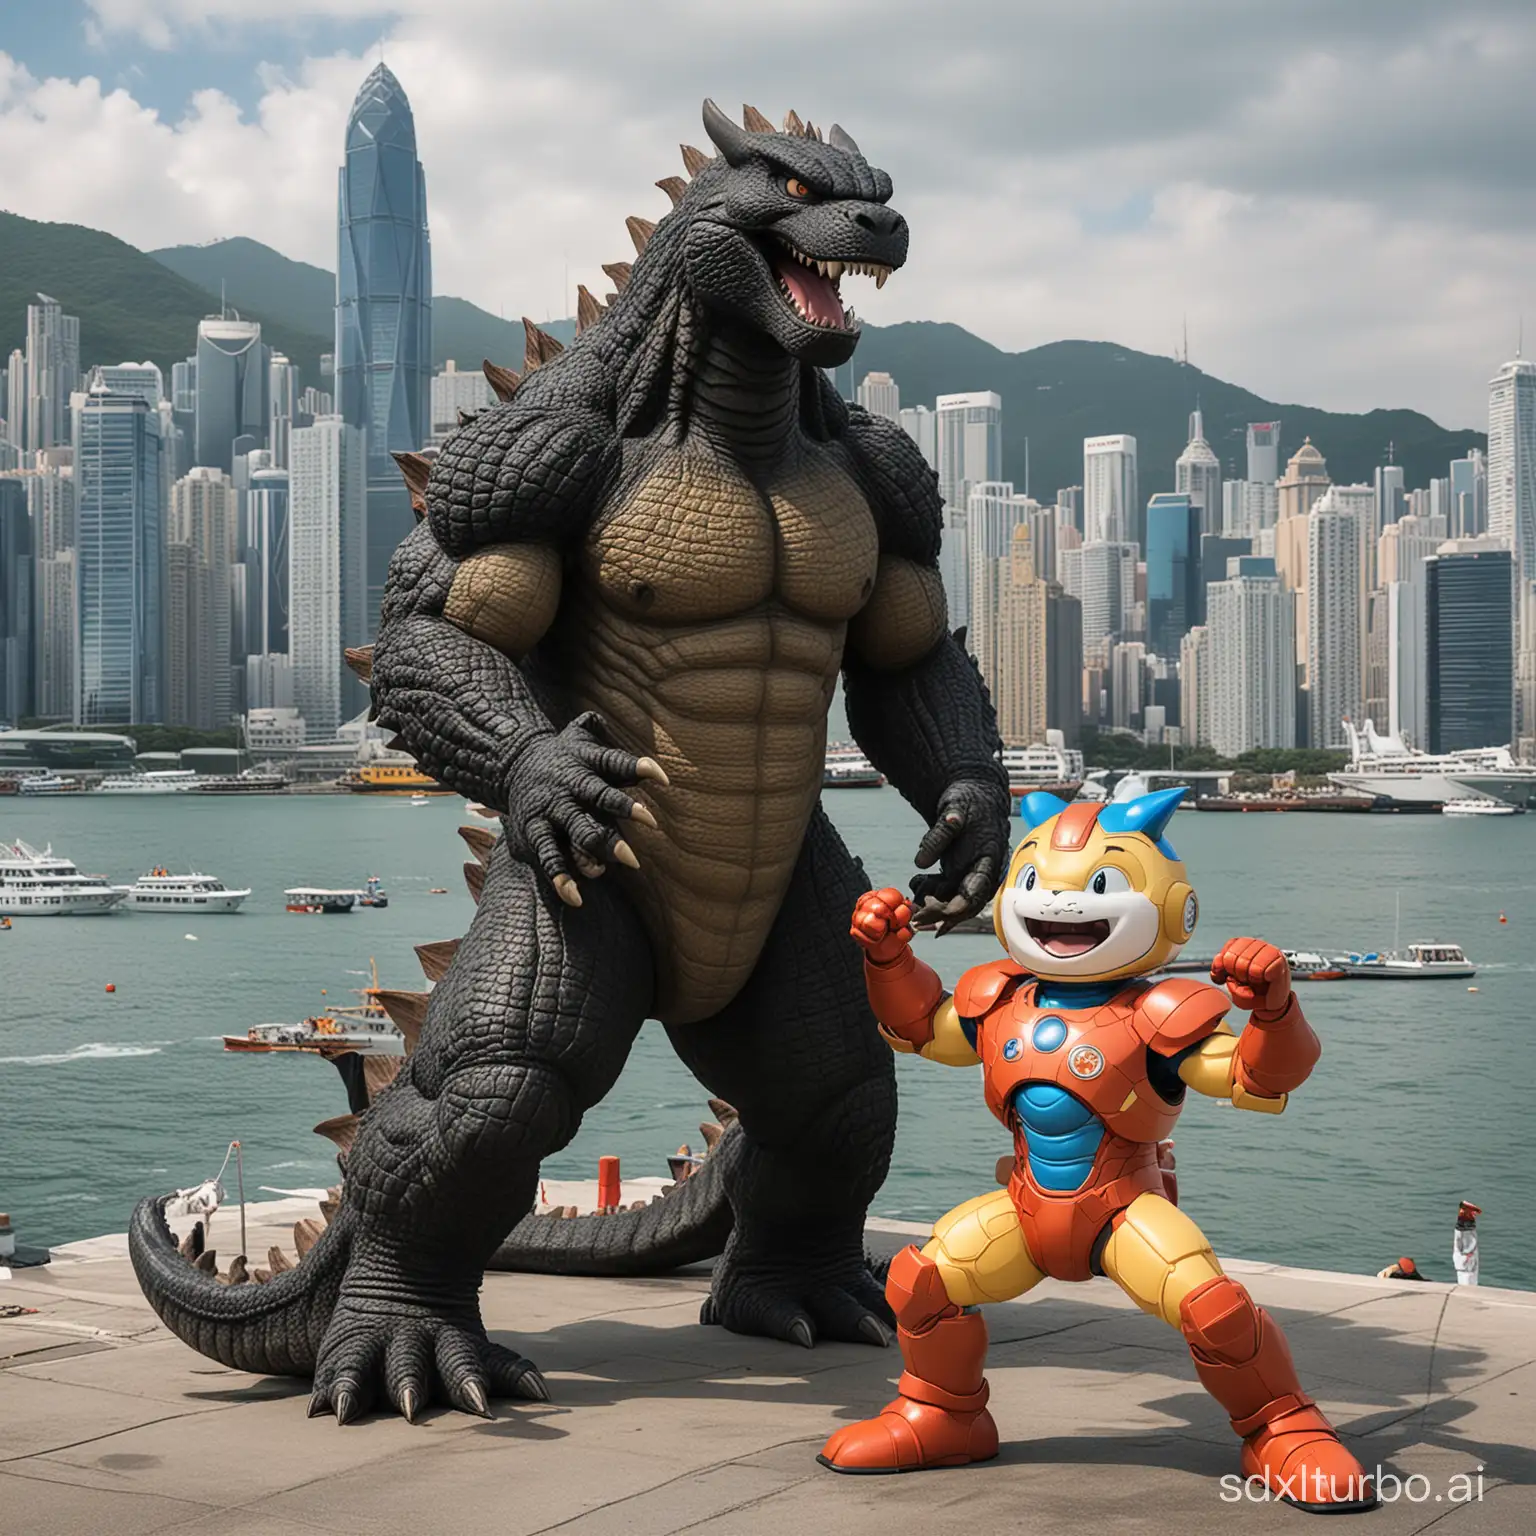 Epic-Showdown-Godzilla-vs-Iron-Man-Wrestling-Match-in-Hong-Kong-Harbor